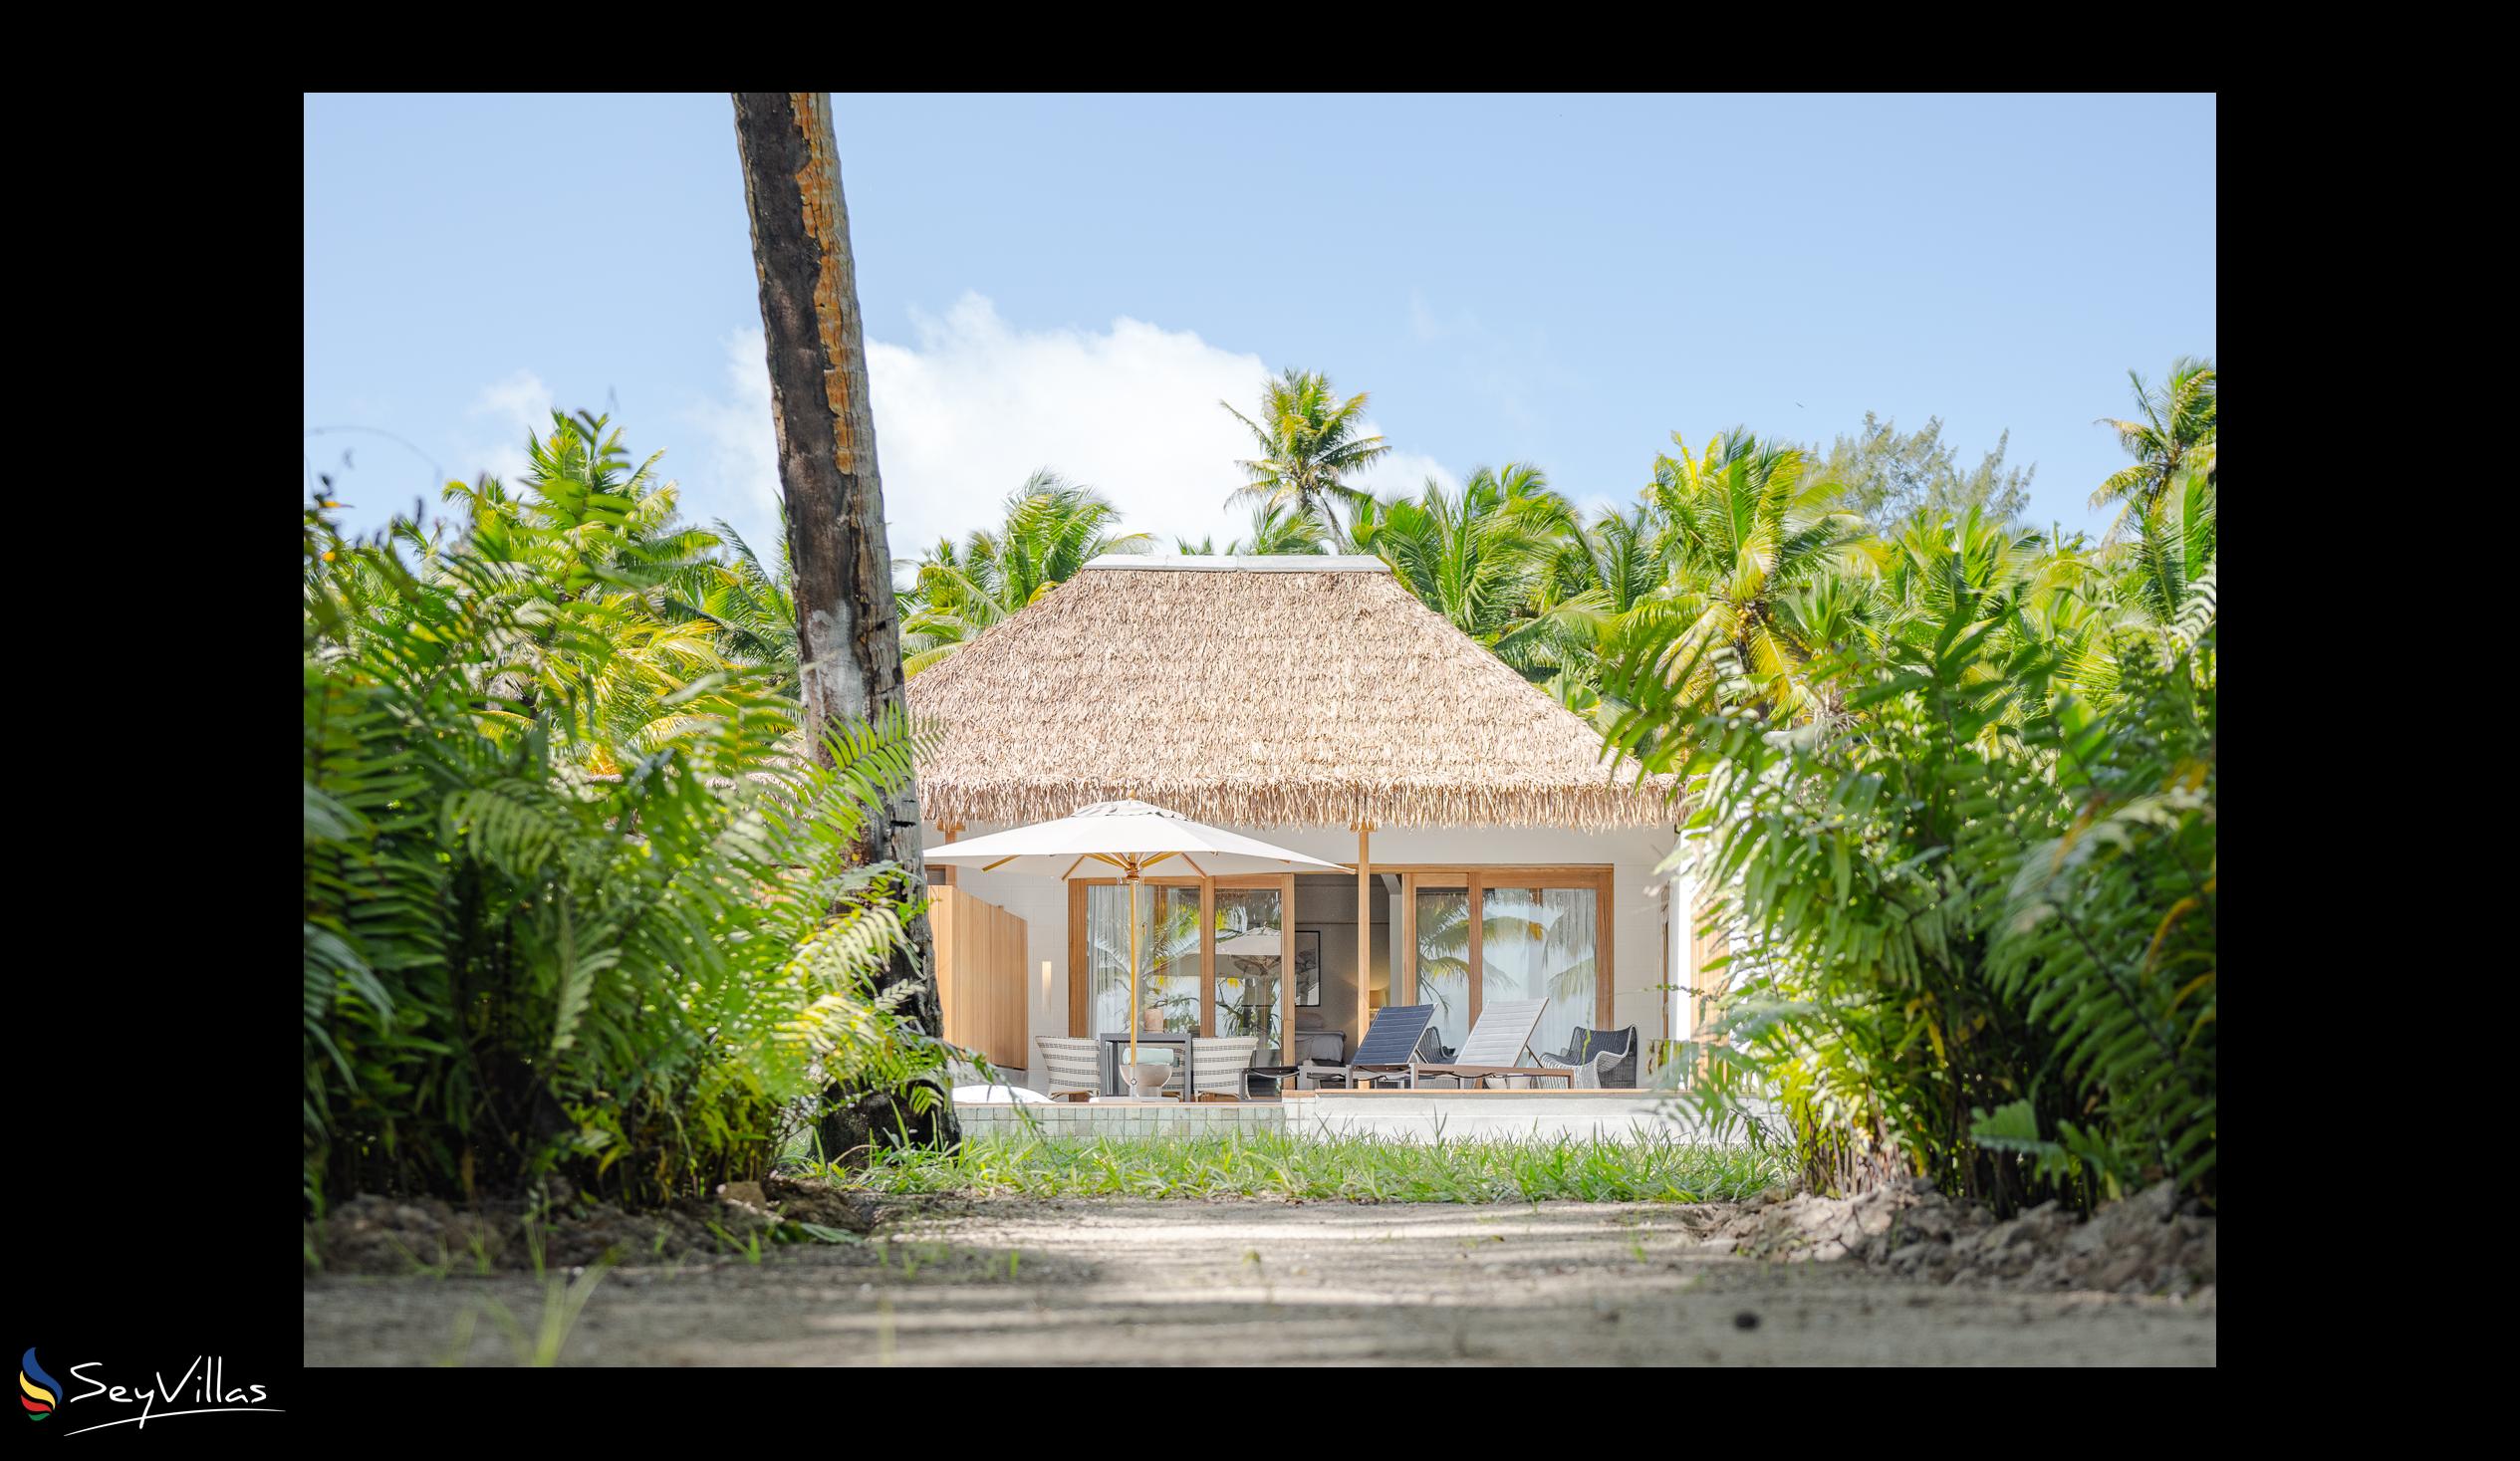 Photo 159: Alphonse Island Lodge - Beach Villa - Alphonse Island (Seychelles)